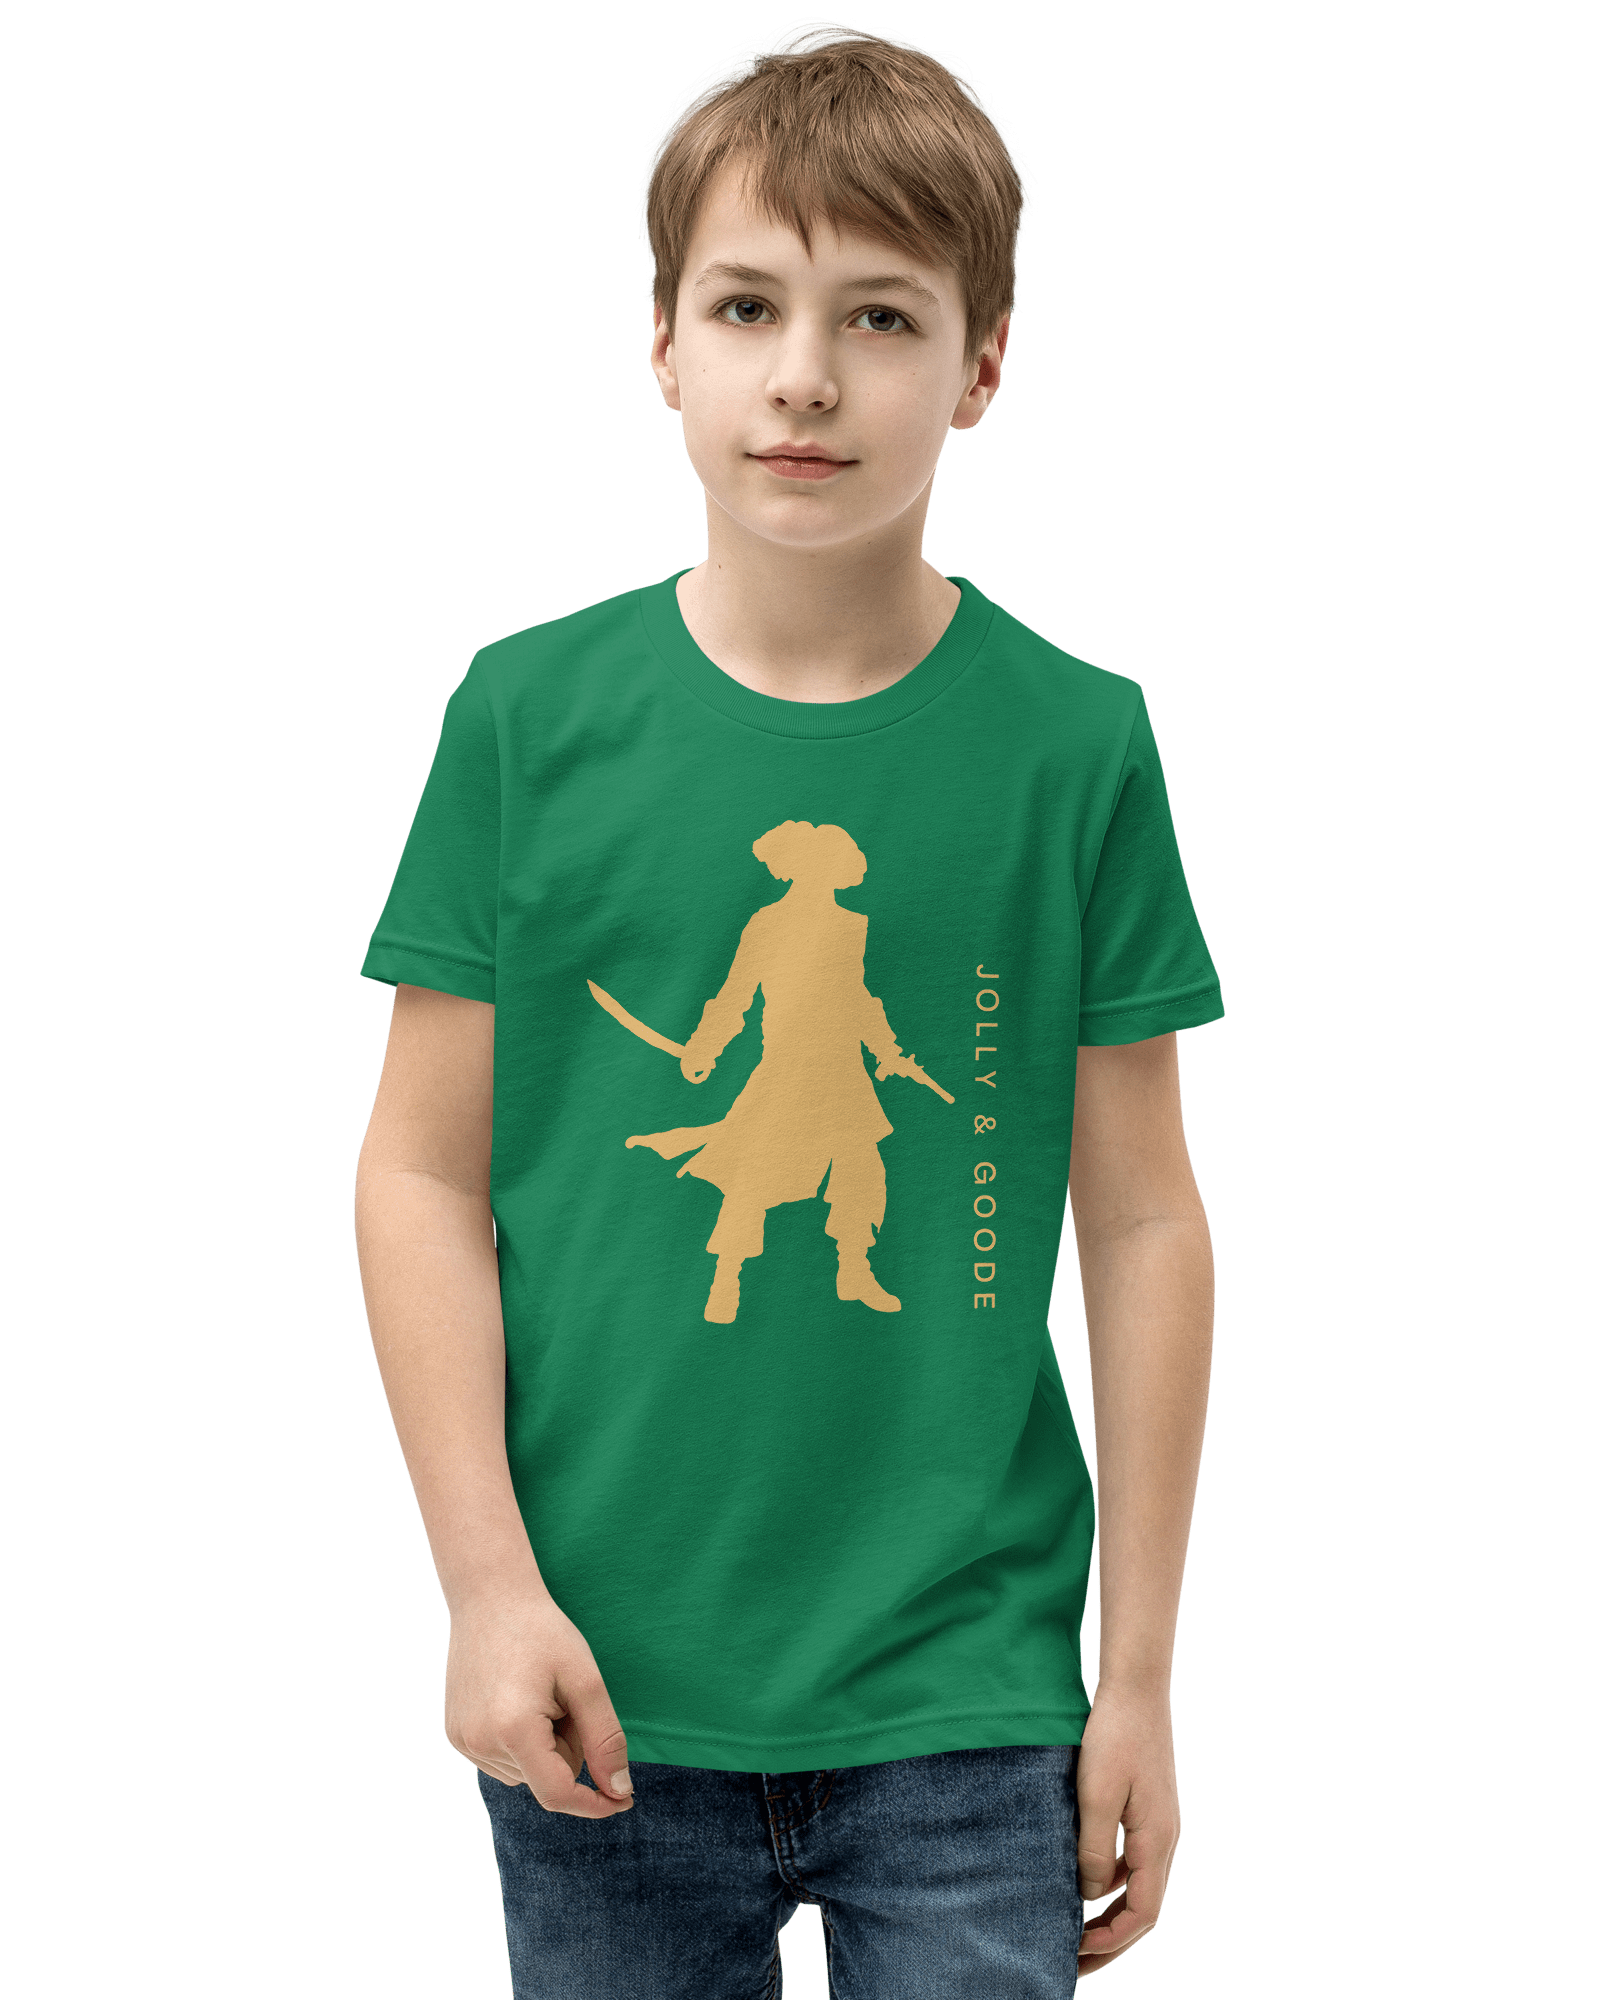 Jolly & Goode Pirate Silhouette Kids T-Shirt Kelly / S kids t-shirts Jolly & Goode